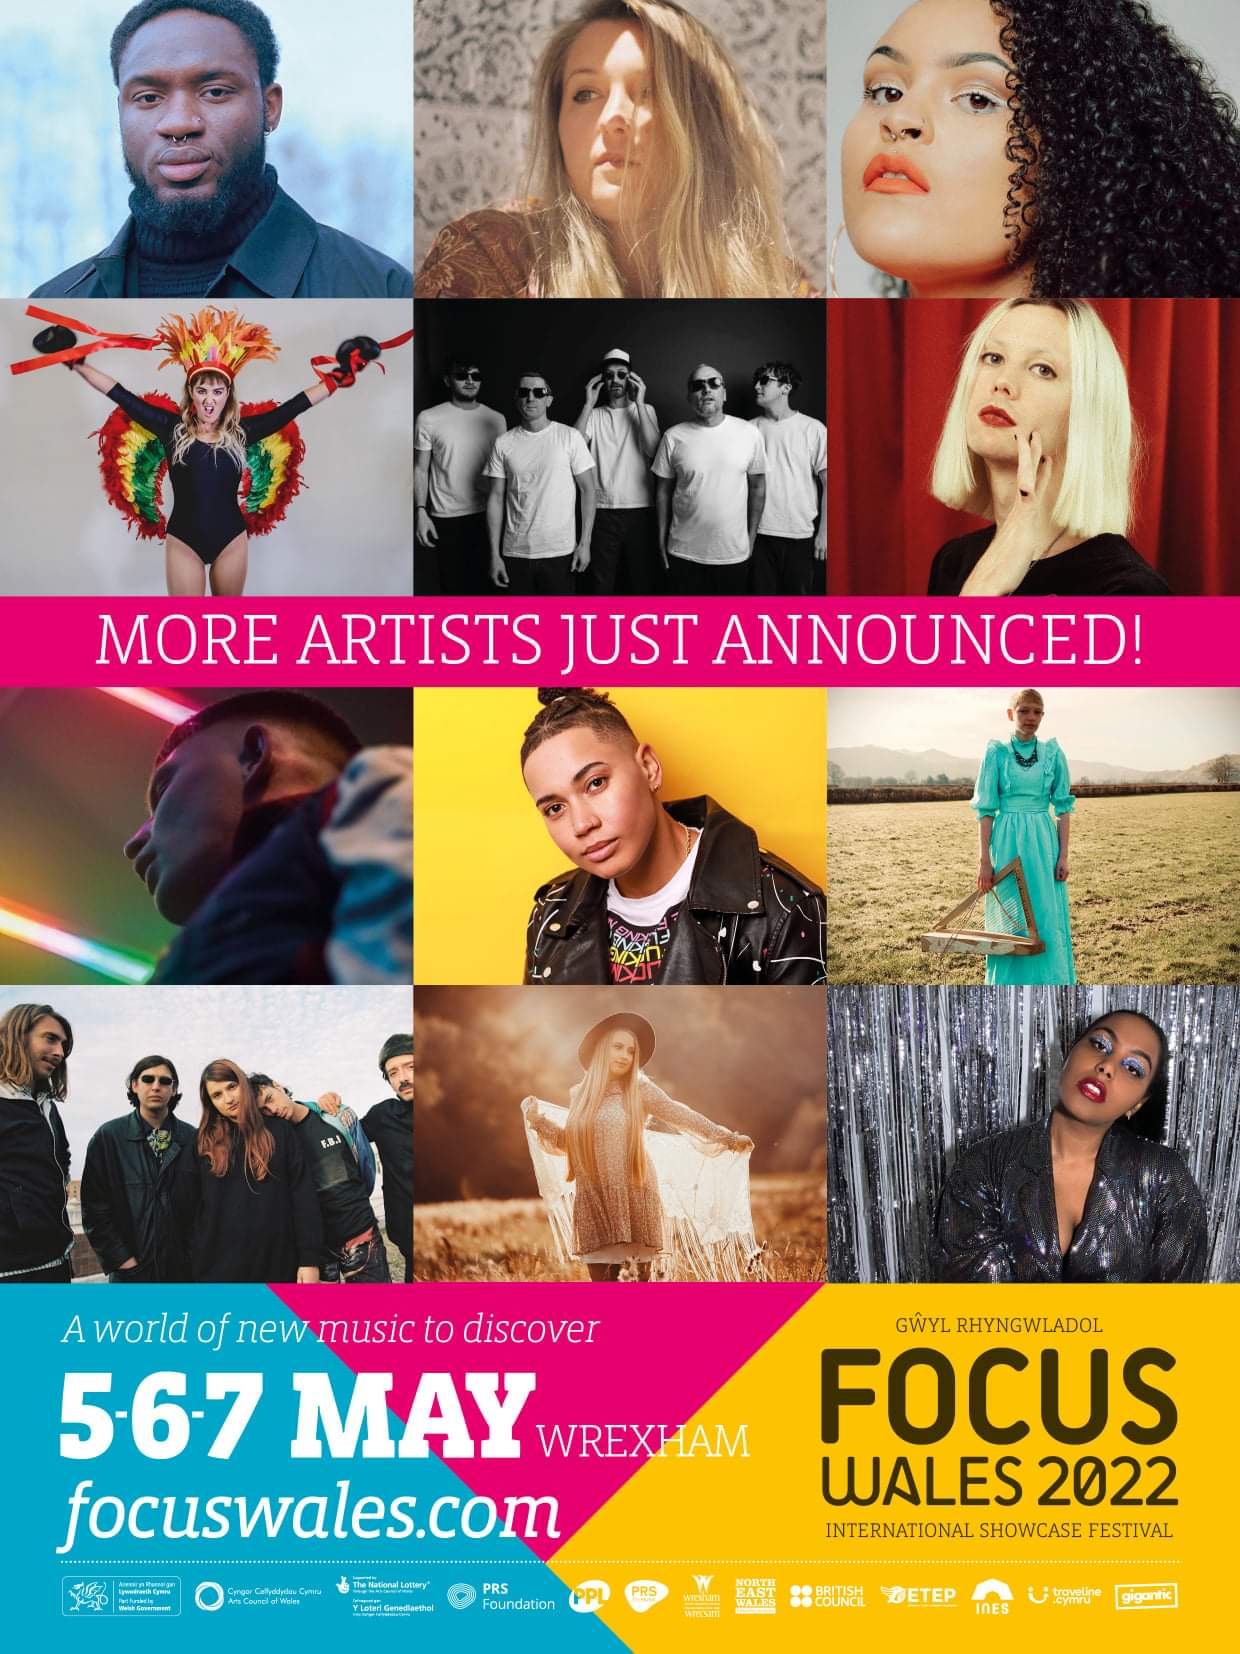 NEWS: Ogun, Minas, Asha Jane, Keys, Eadyth, Jodie Marie amongst next wave of acts for Focus Wales 3